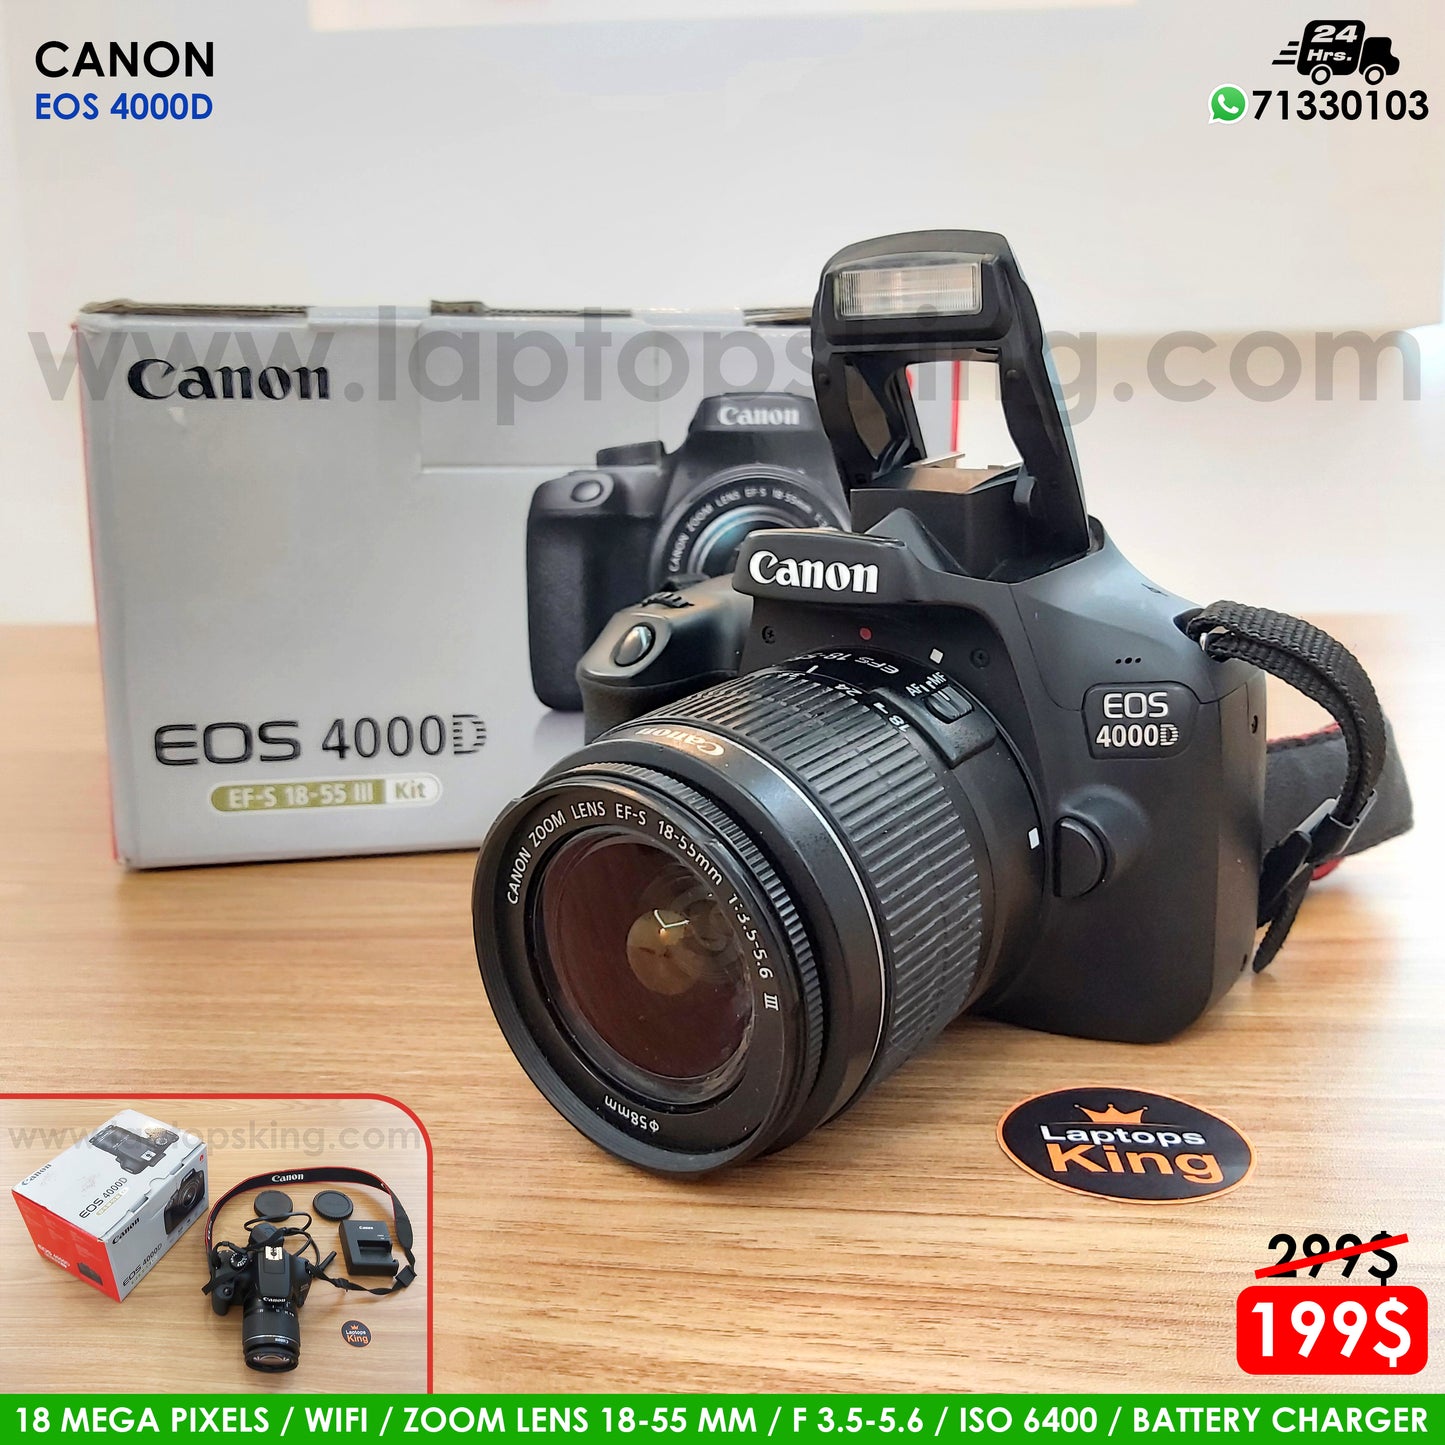 Canon Eos 4000d 18-55mm Wifi Digital Camera (Used Like New)